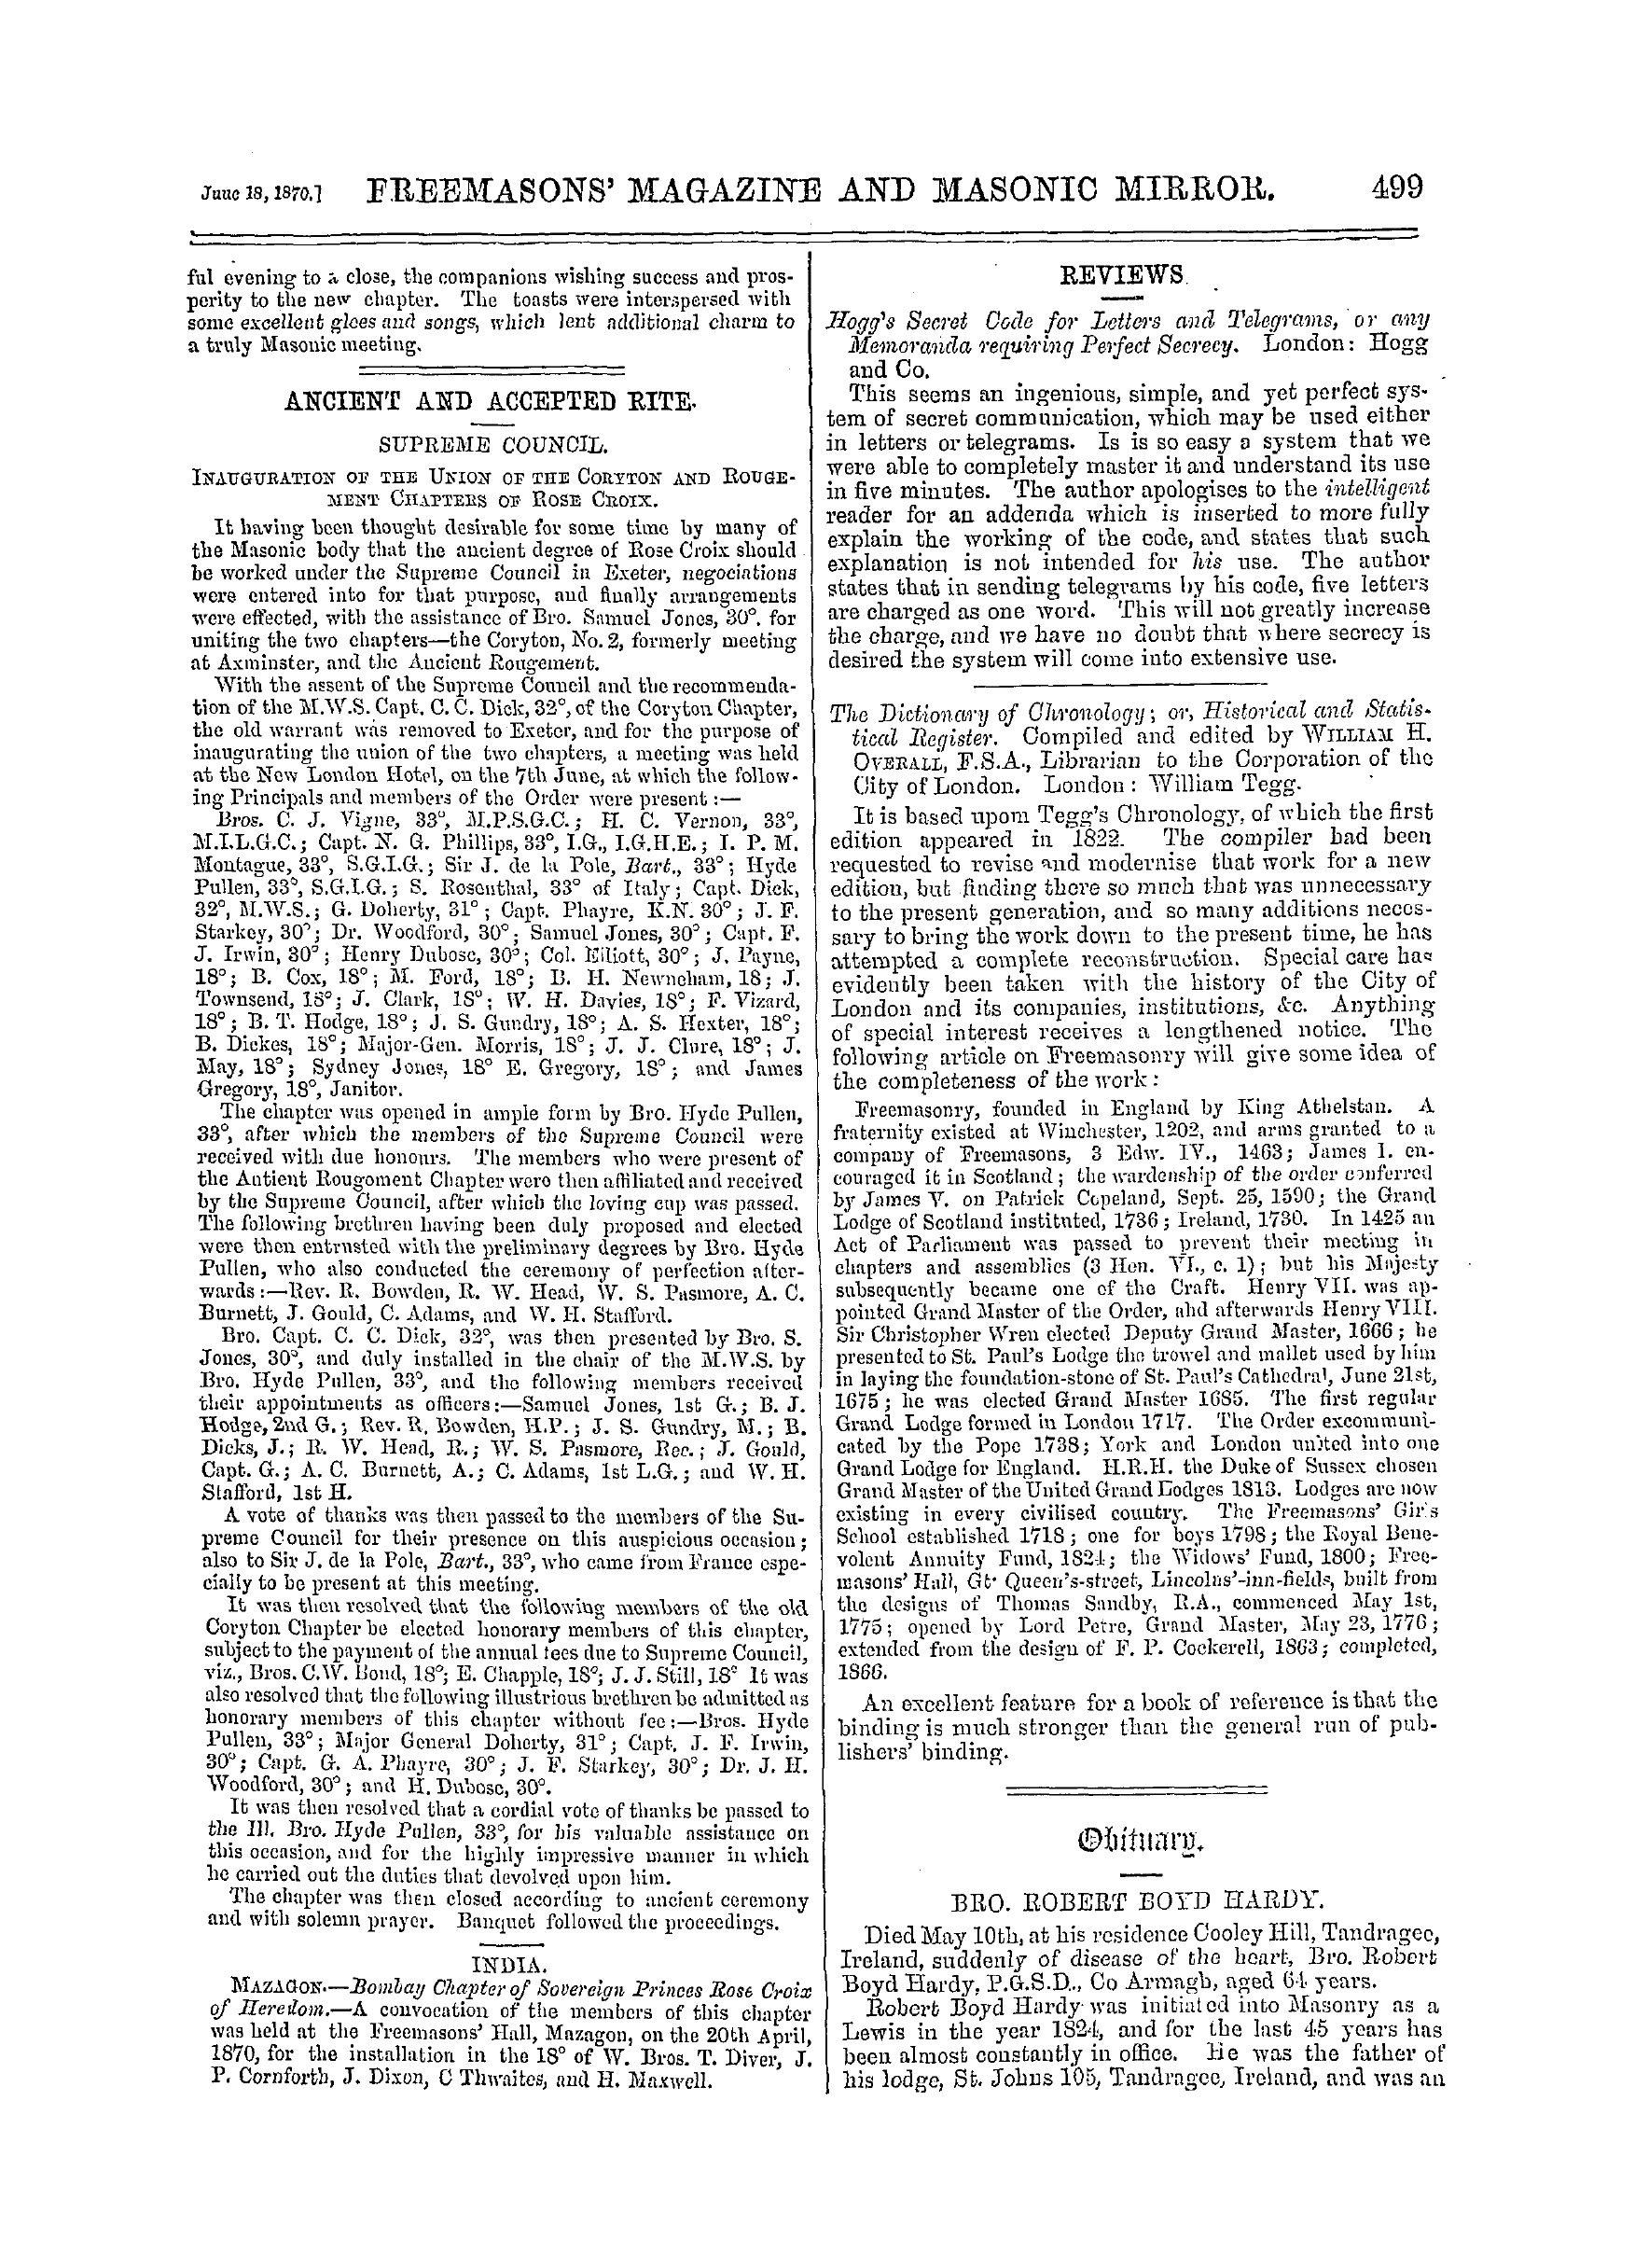 The Freemasons' Monthly Magazine: 1870-06-18 - Royal Arch.